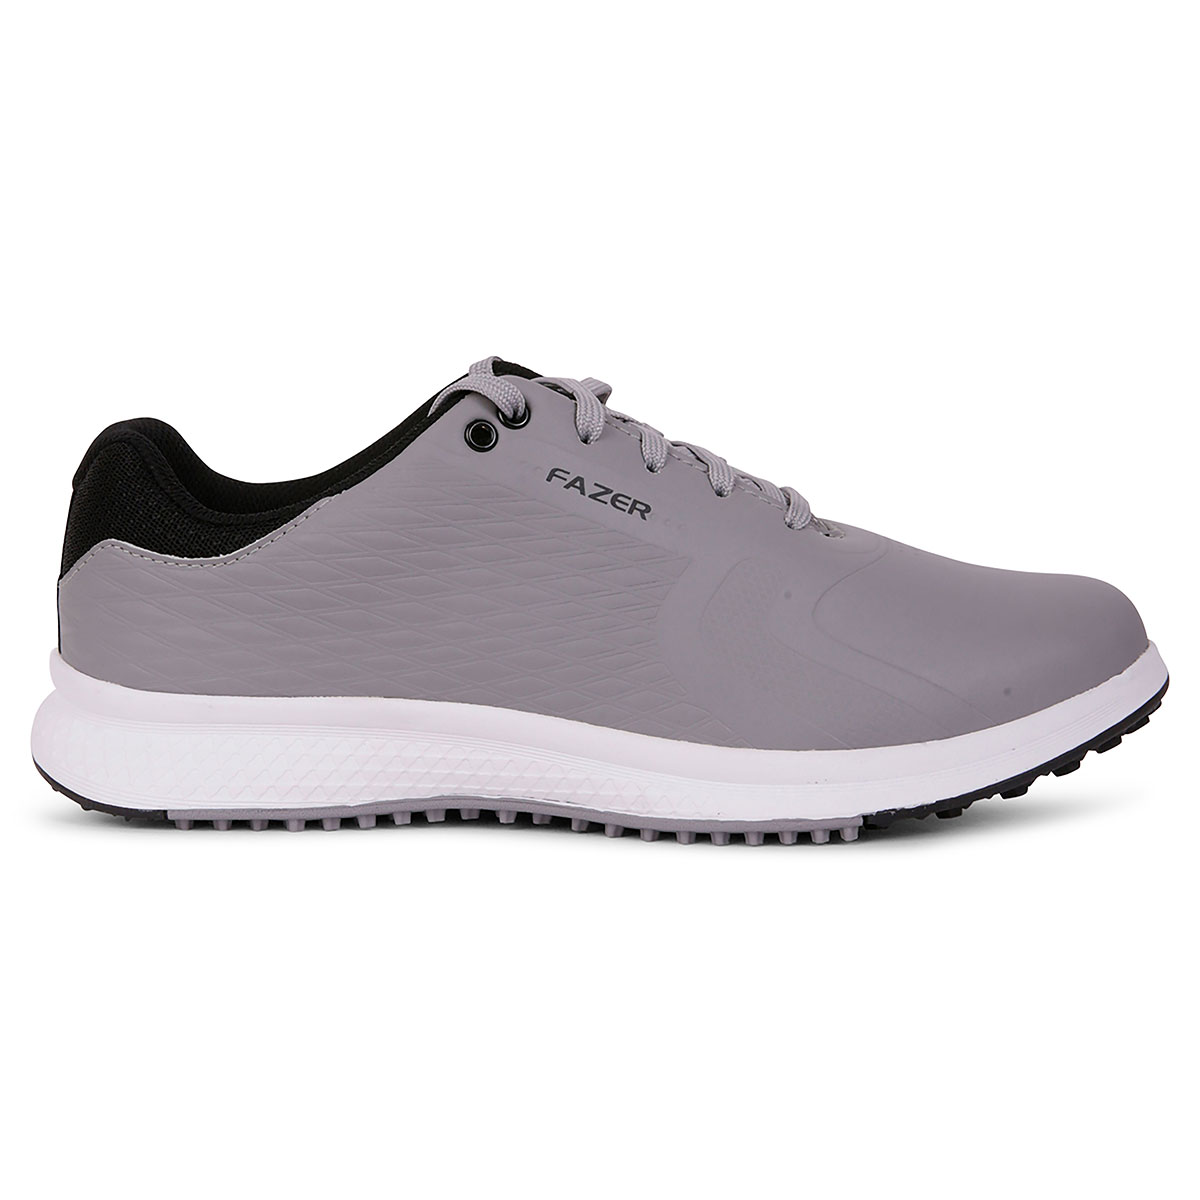 Fazer Men’s Explorer Waterproof Golf Shoes - Grey